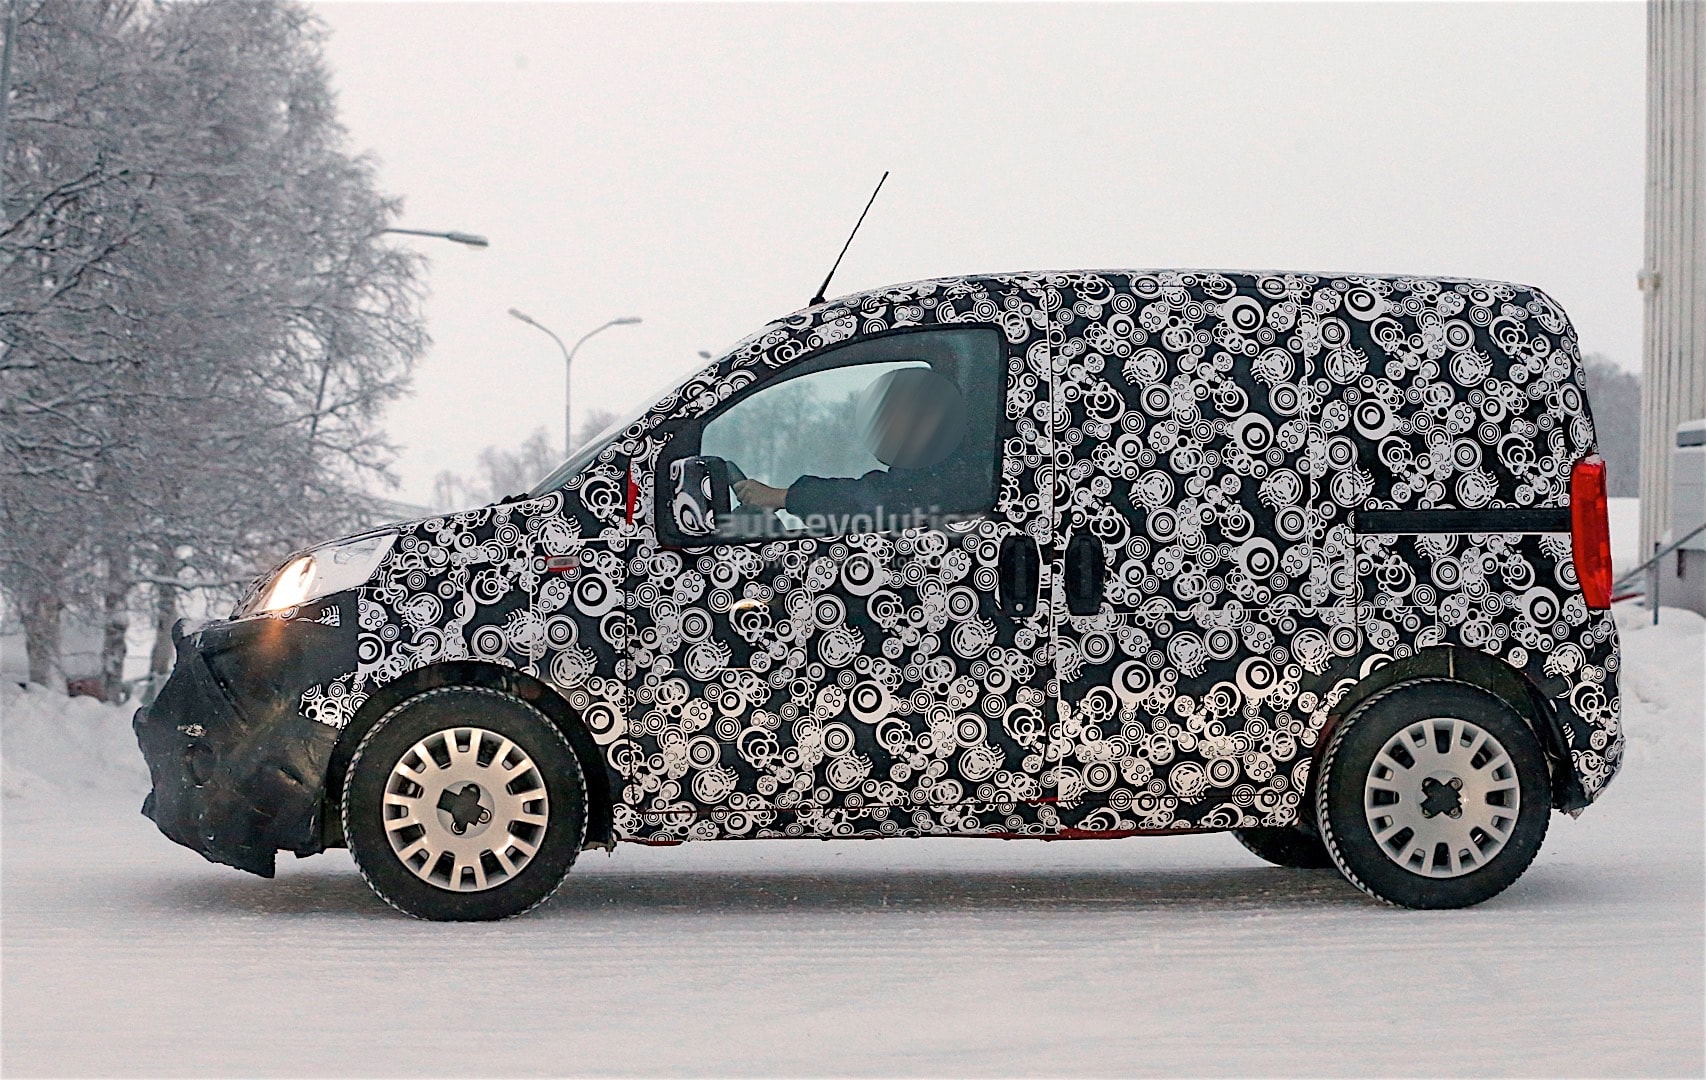 Fiat Qubo/Fiorino Facelift Might Cross 